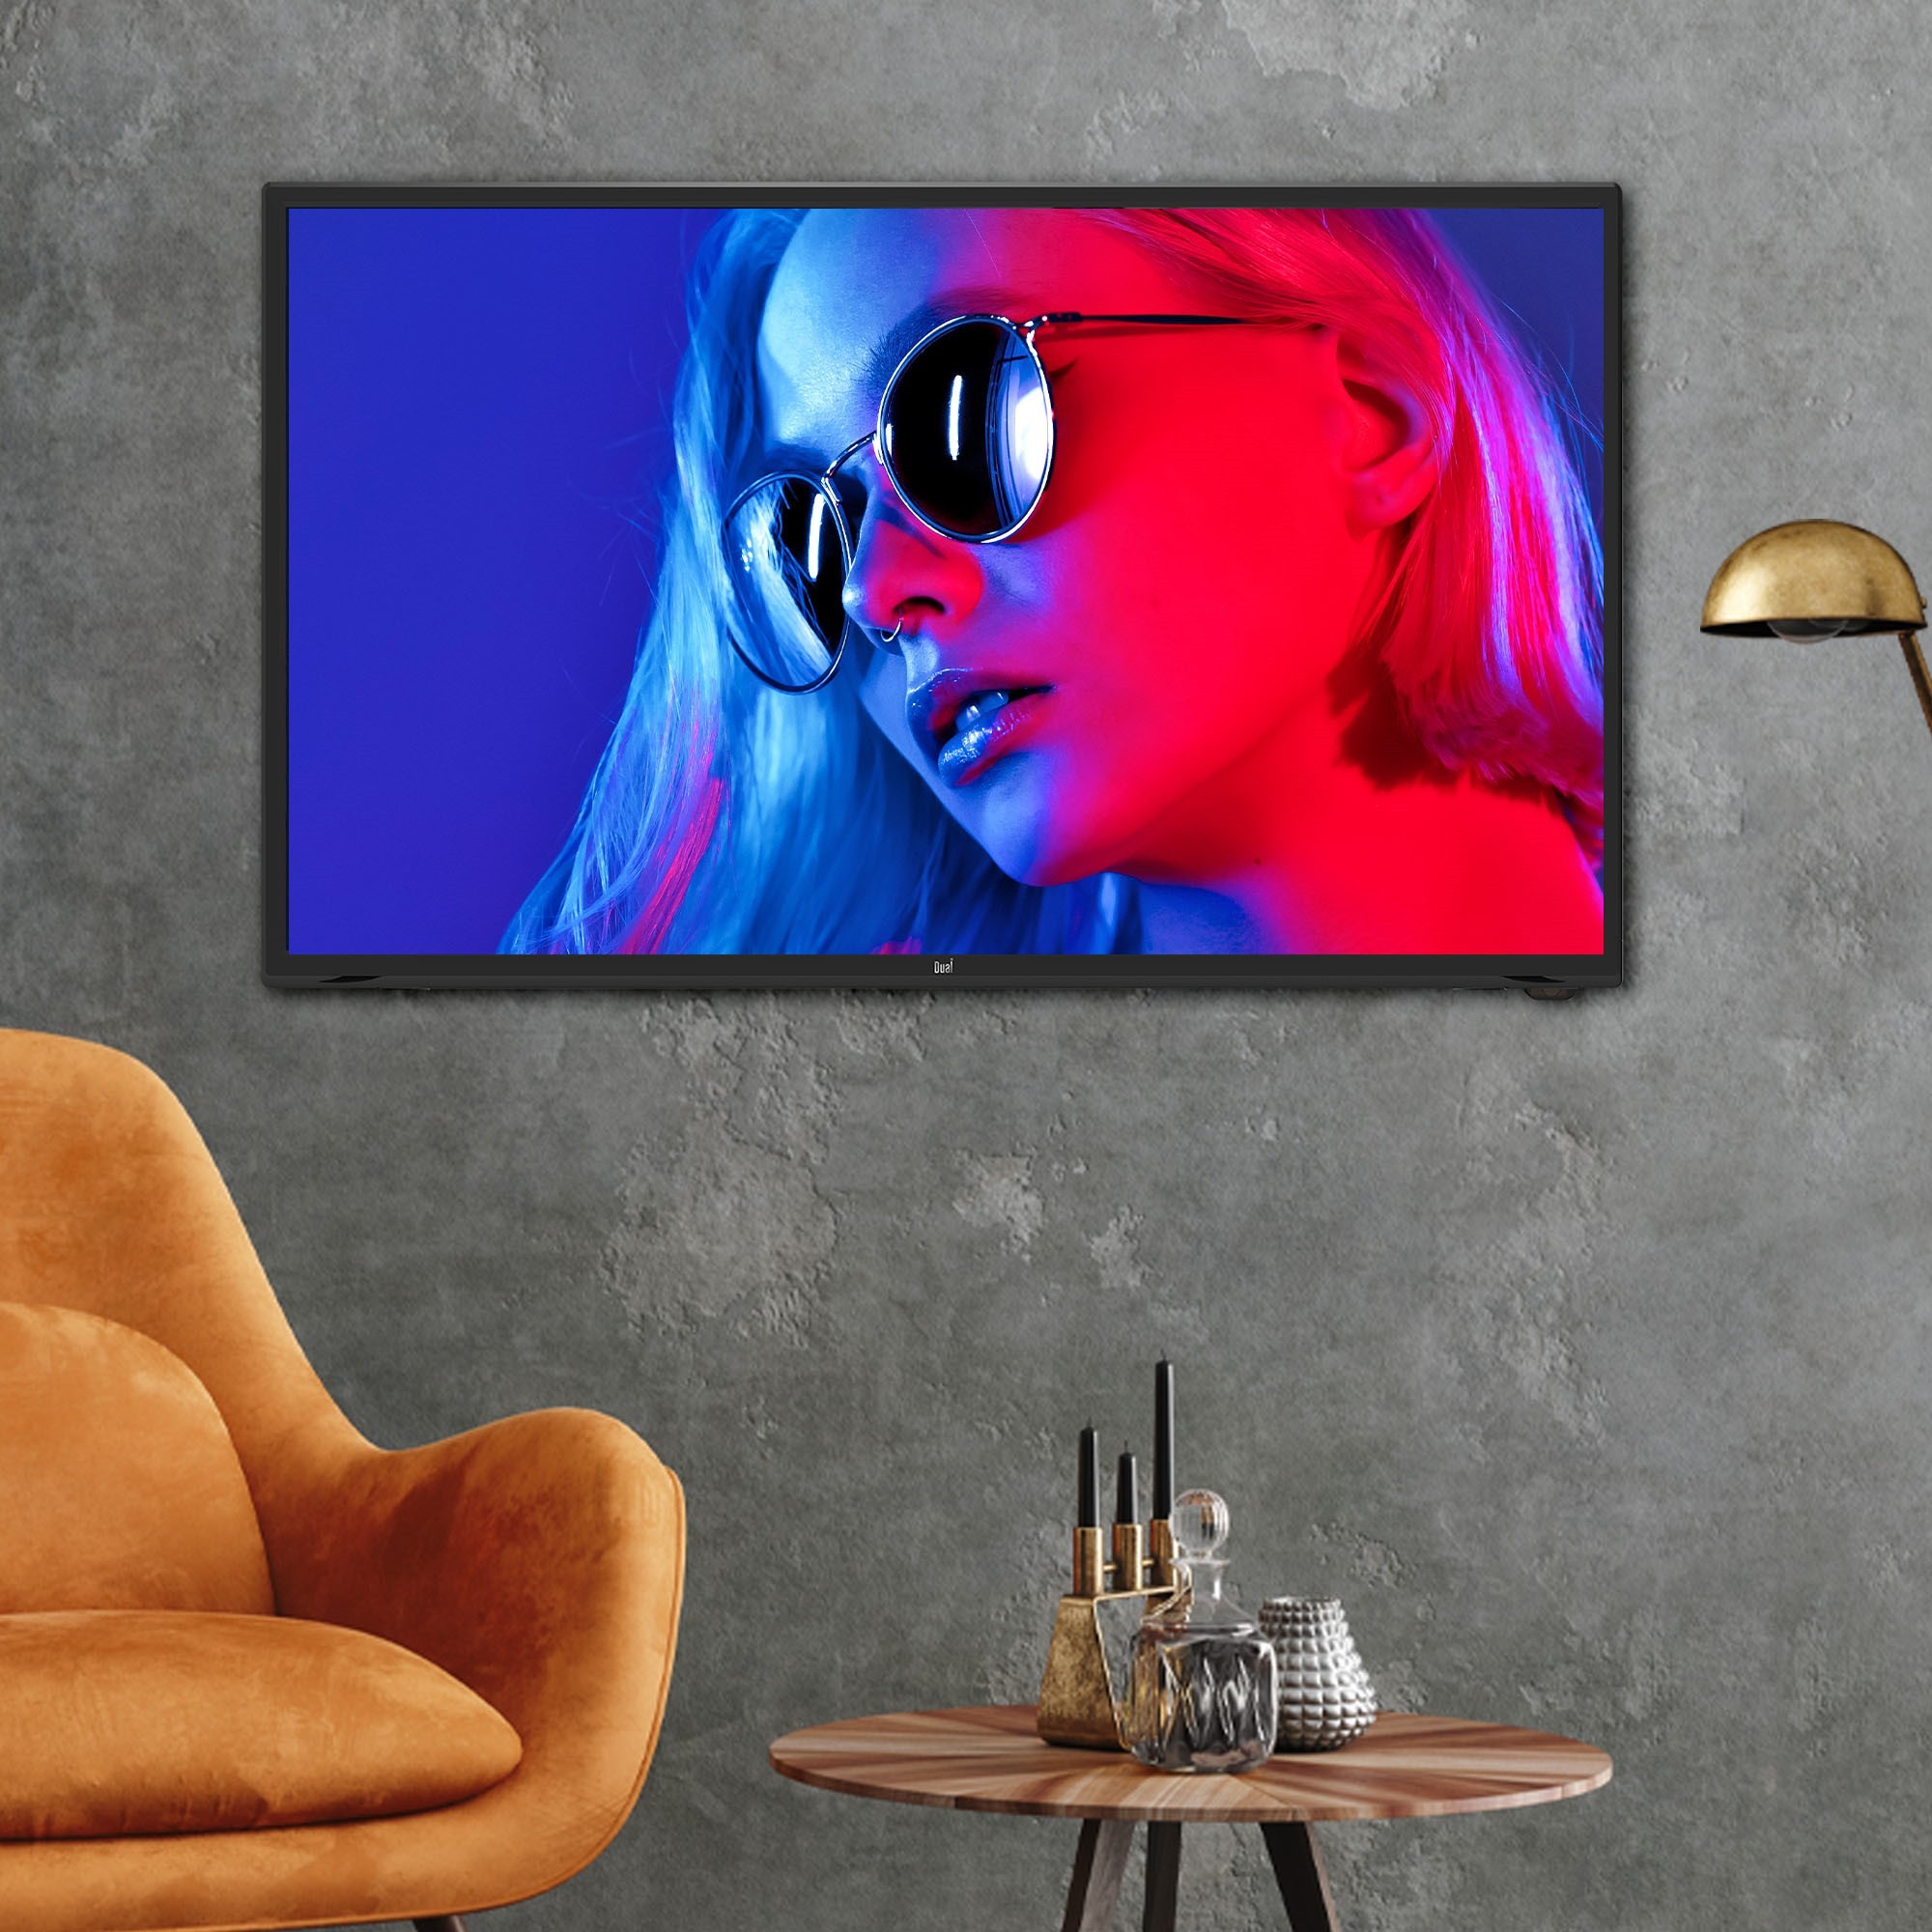 DUAL TV LED 80 cm  - DL-32HD-008